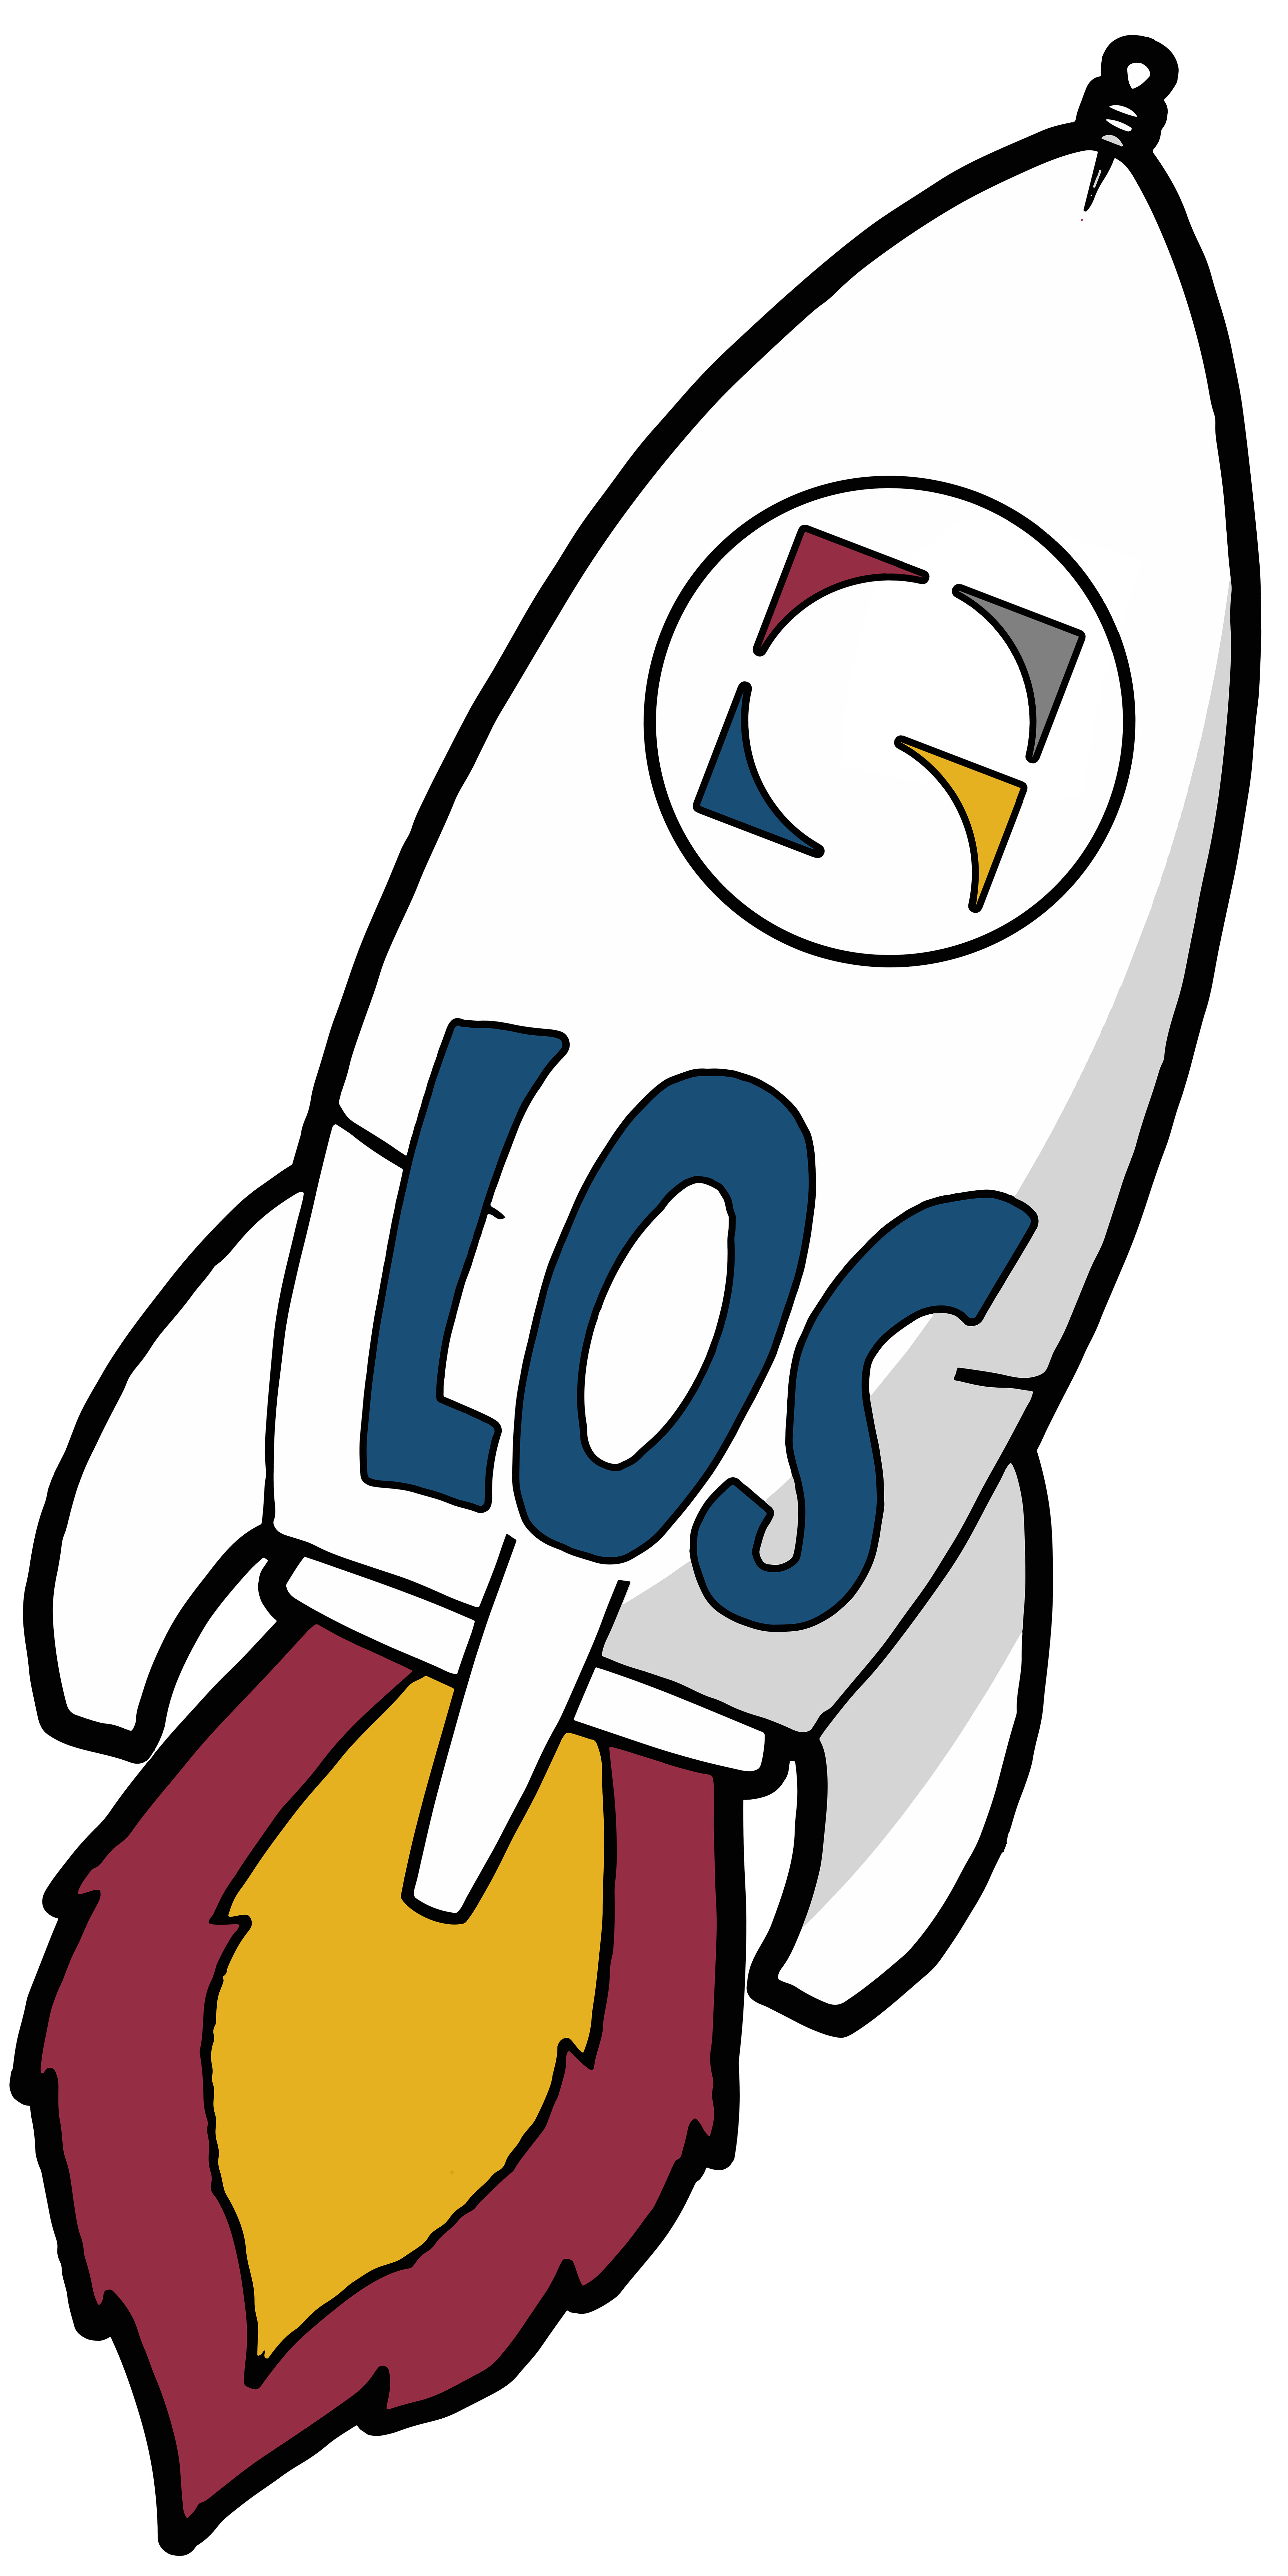 LOS Logo rotiert